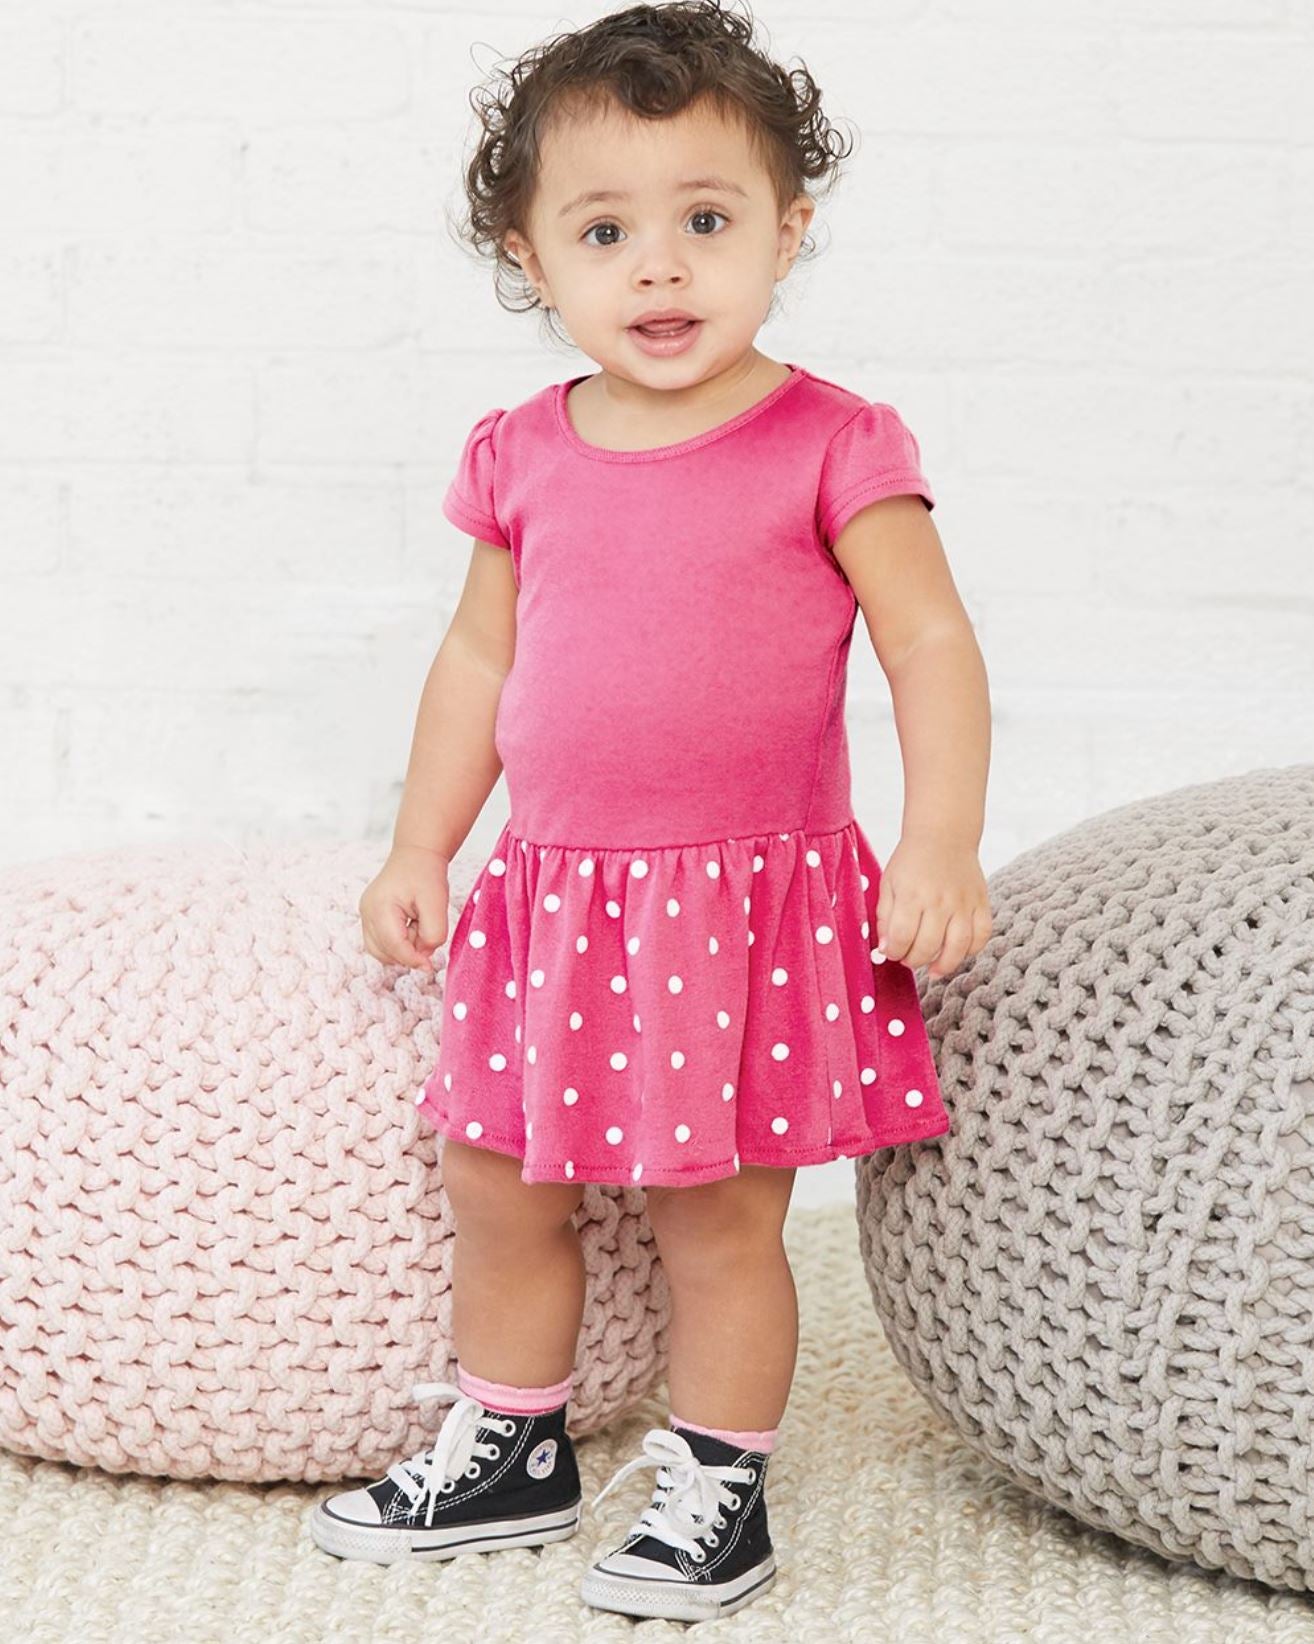 Baby Cotton Rib Dress, (Sizes: 6M - 24M), Raspberry with White Dots